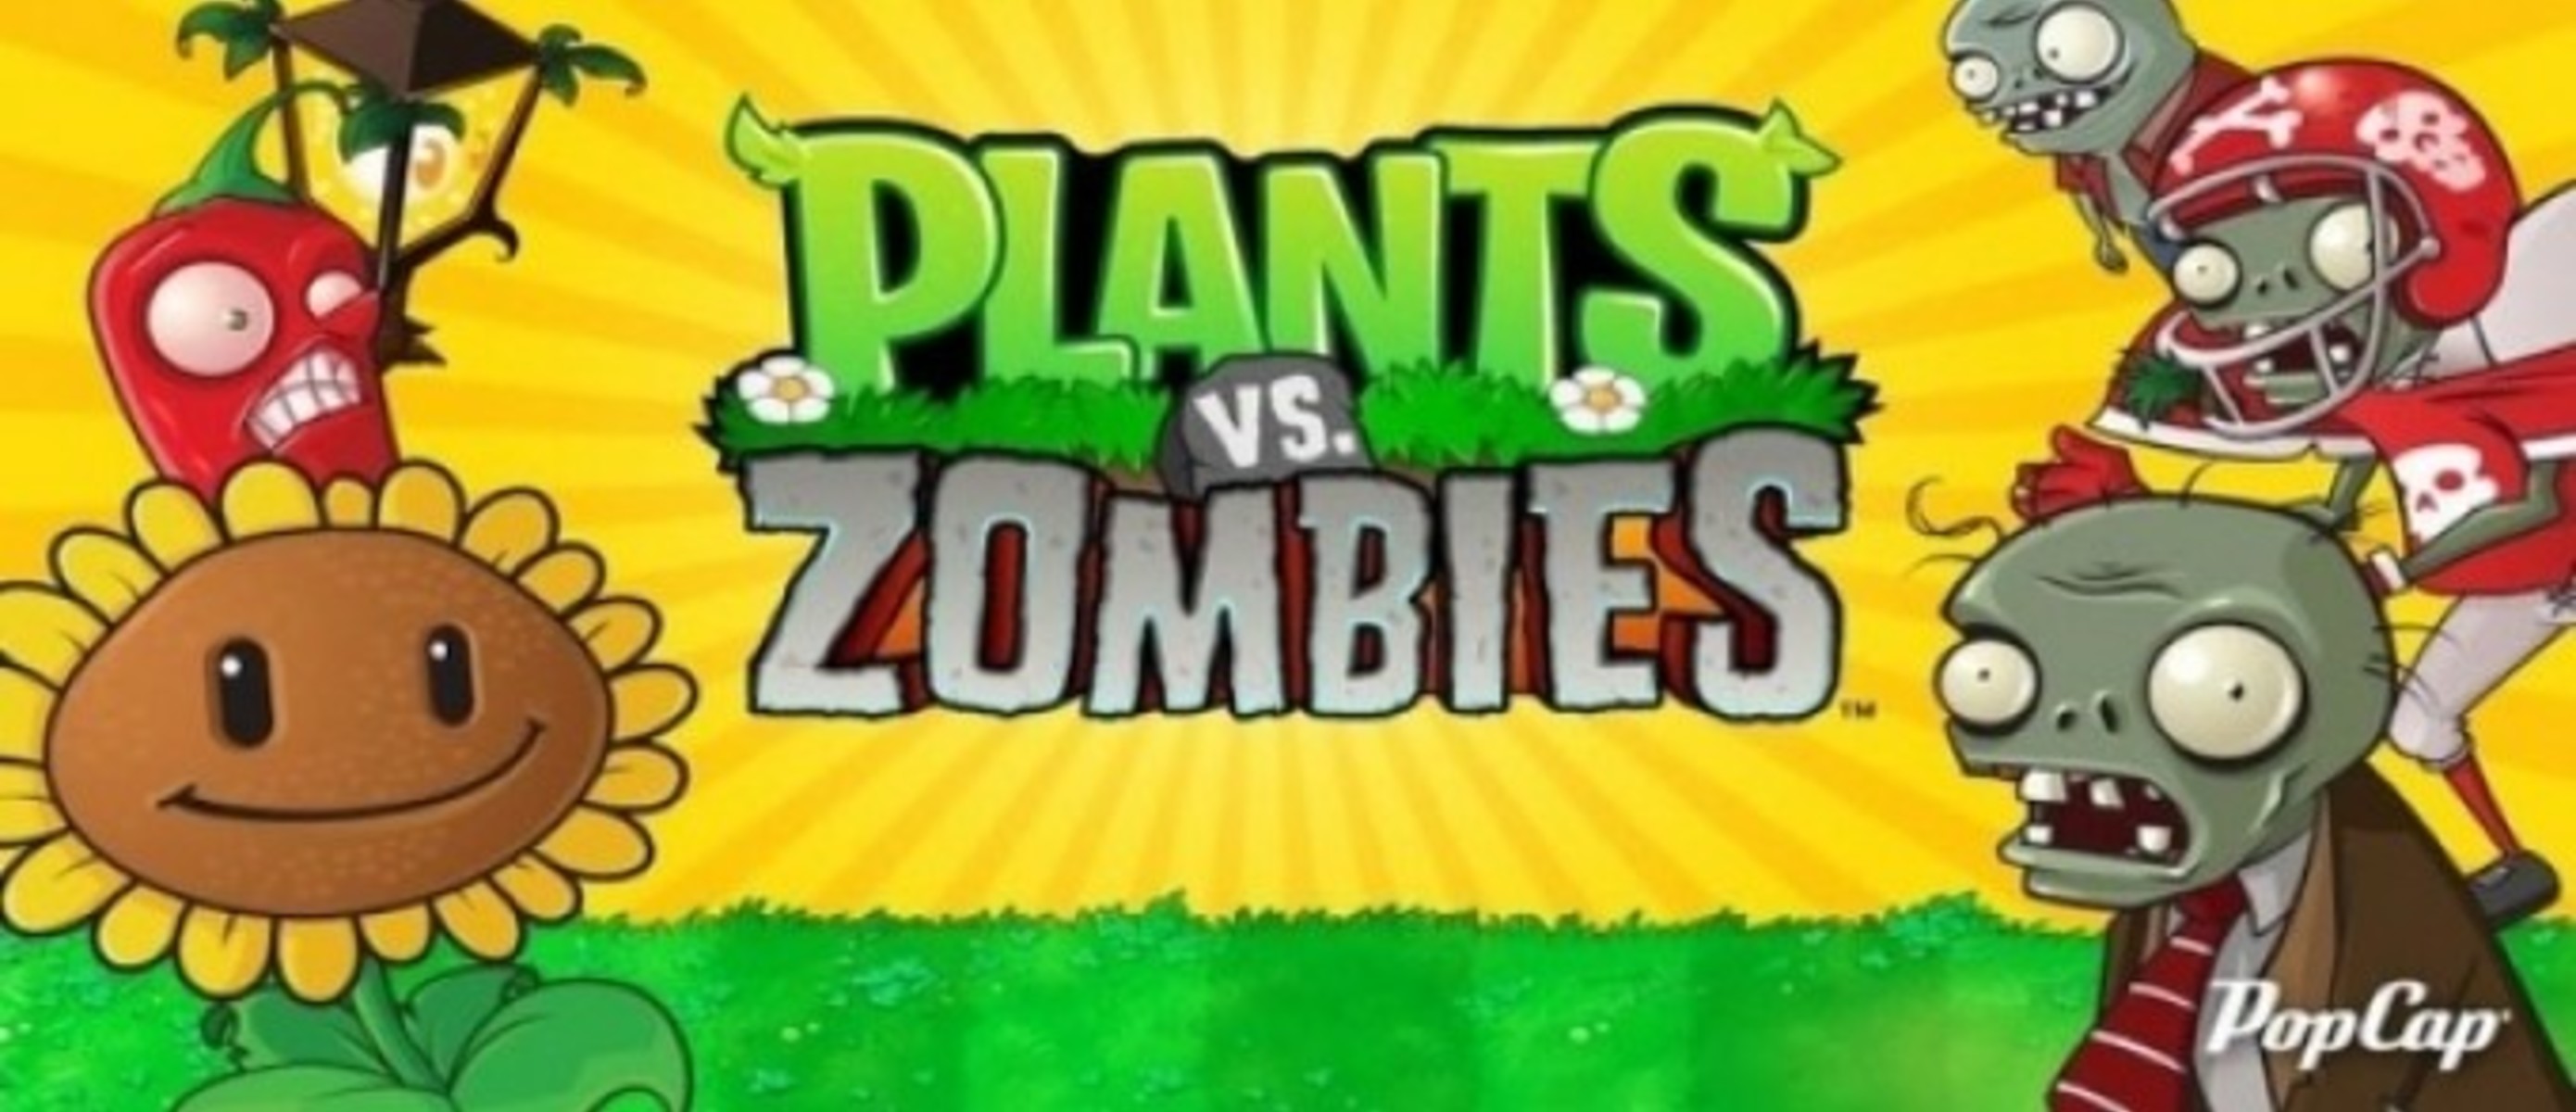 Растения против зомби люди. Плантс против зомби. Растения против зомби игра. Растения против зомби обложка. Plants vs Zombies растения.